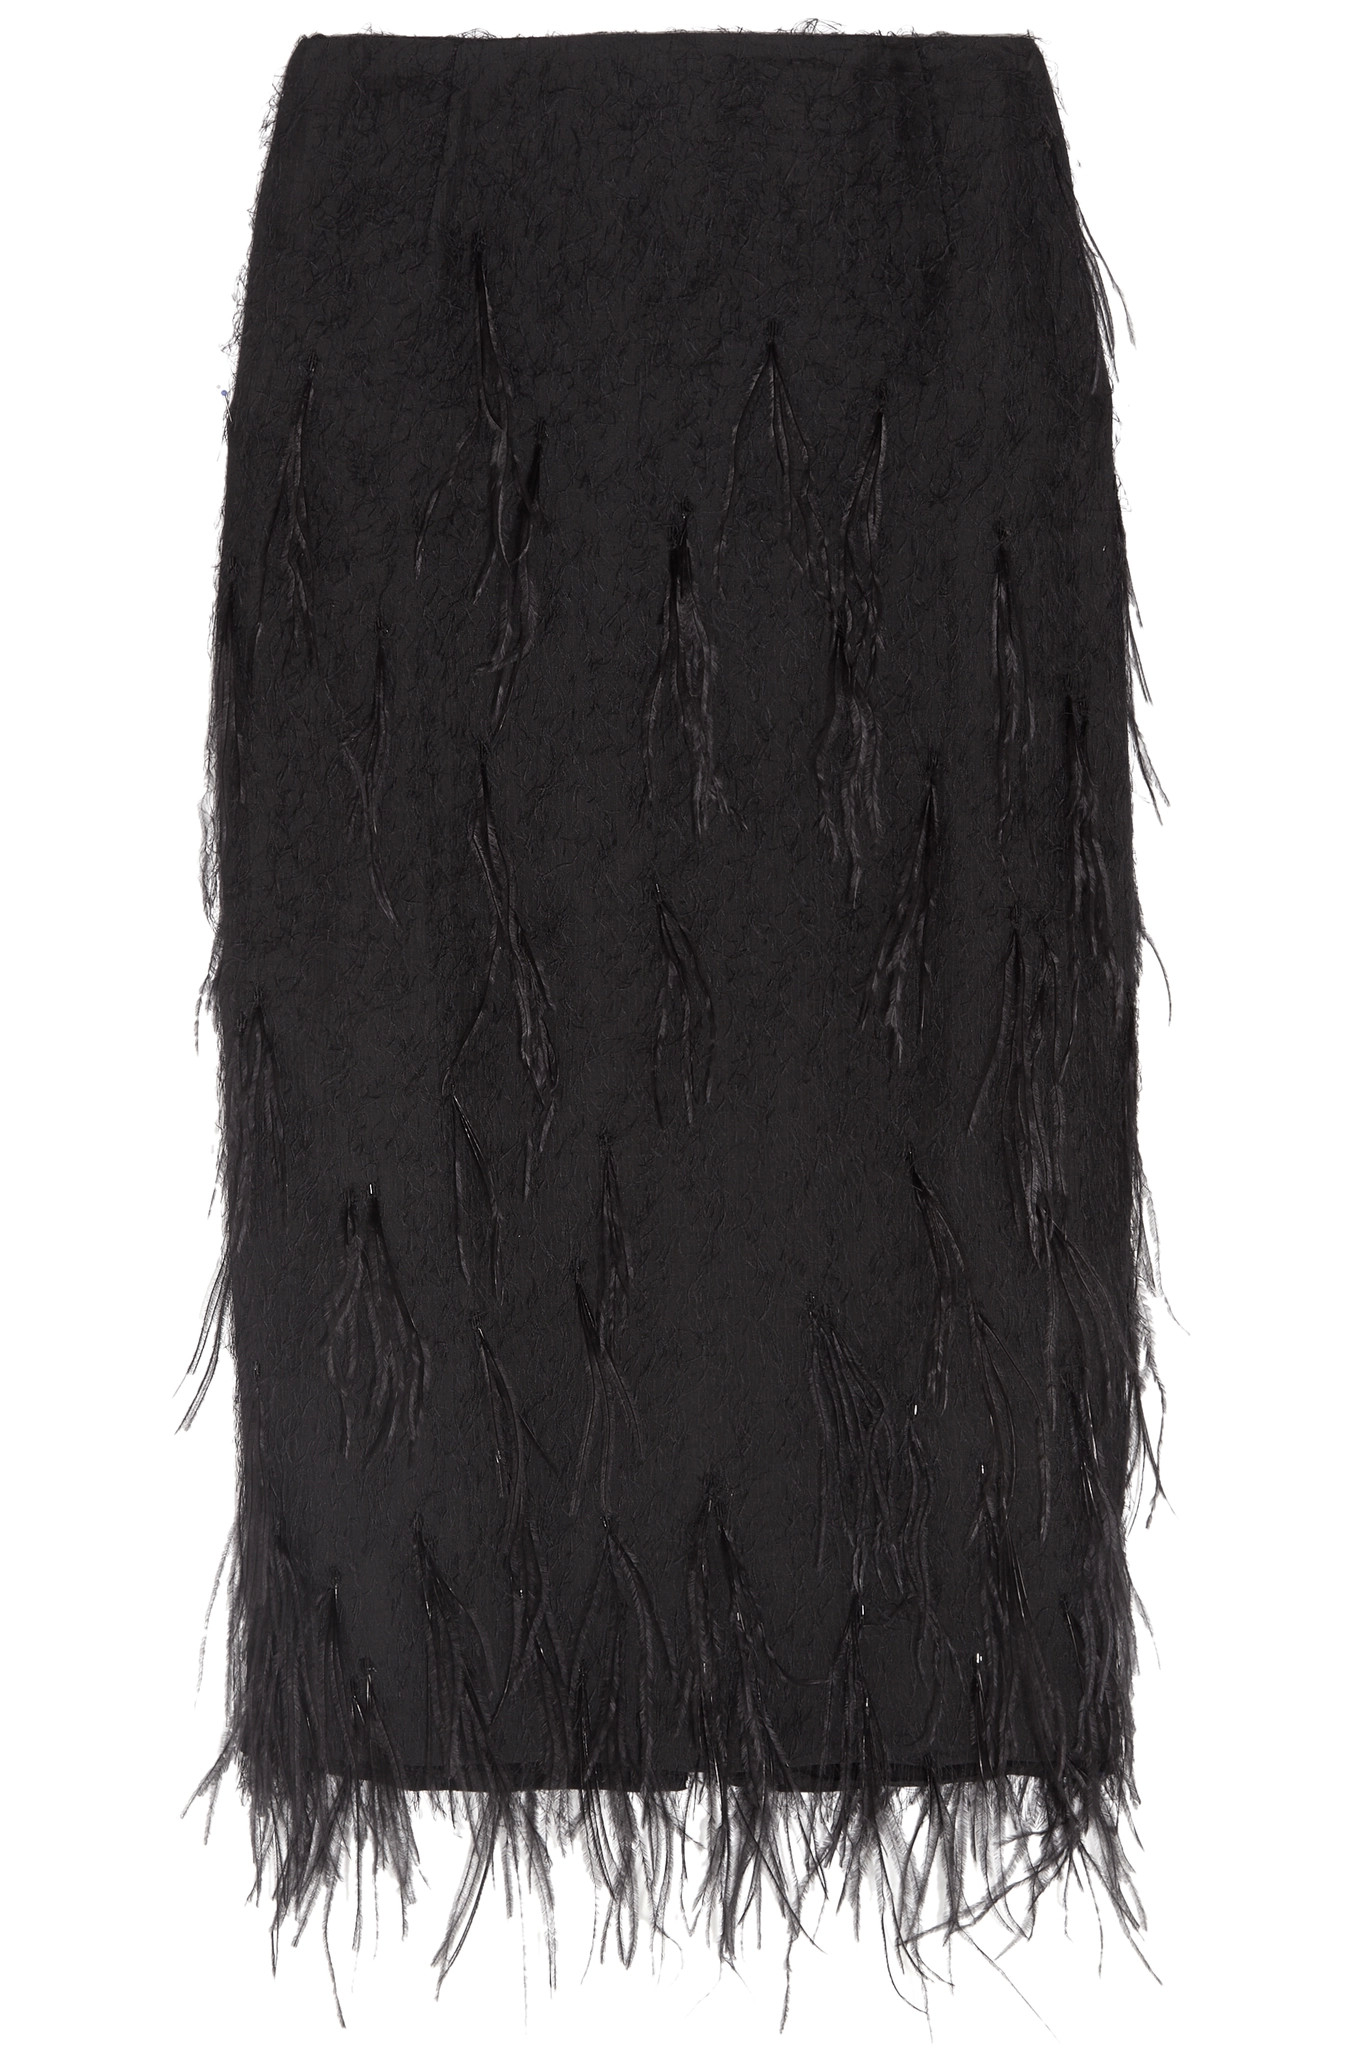 Lyst - Jason wu Genuine Ostrich Feather Trim Skirt in Black